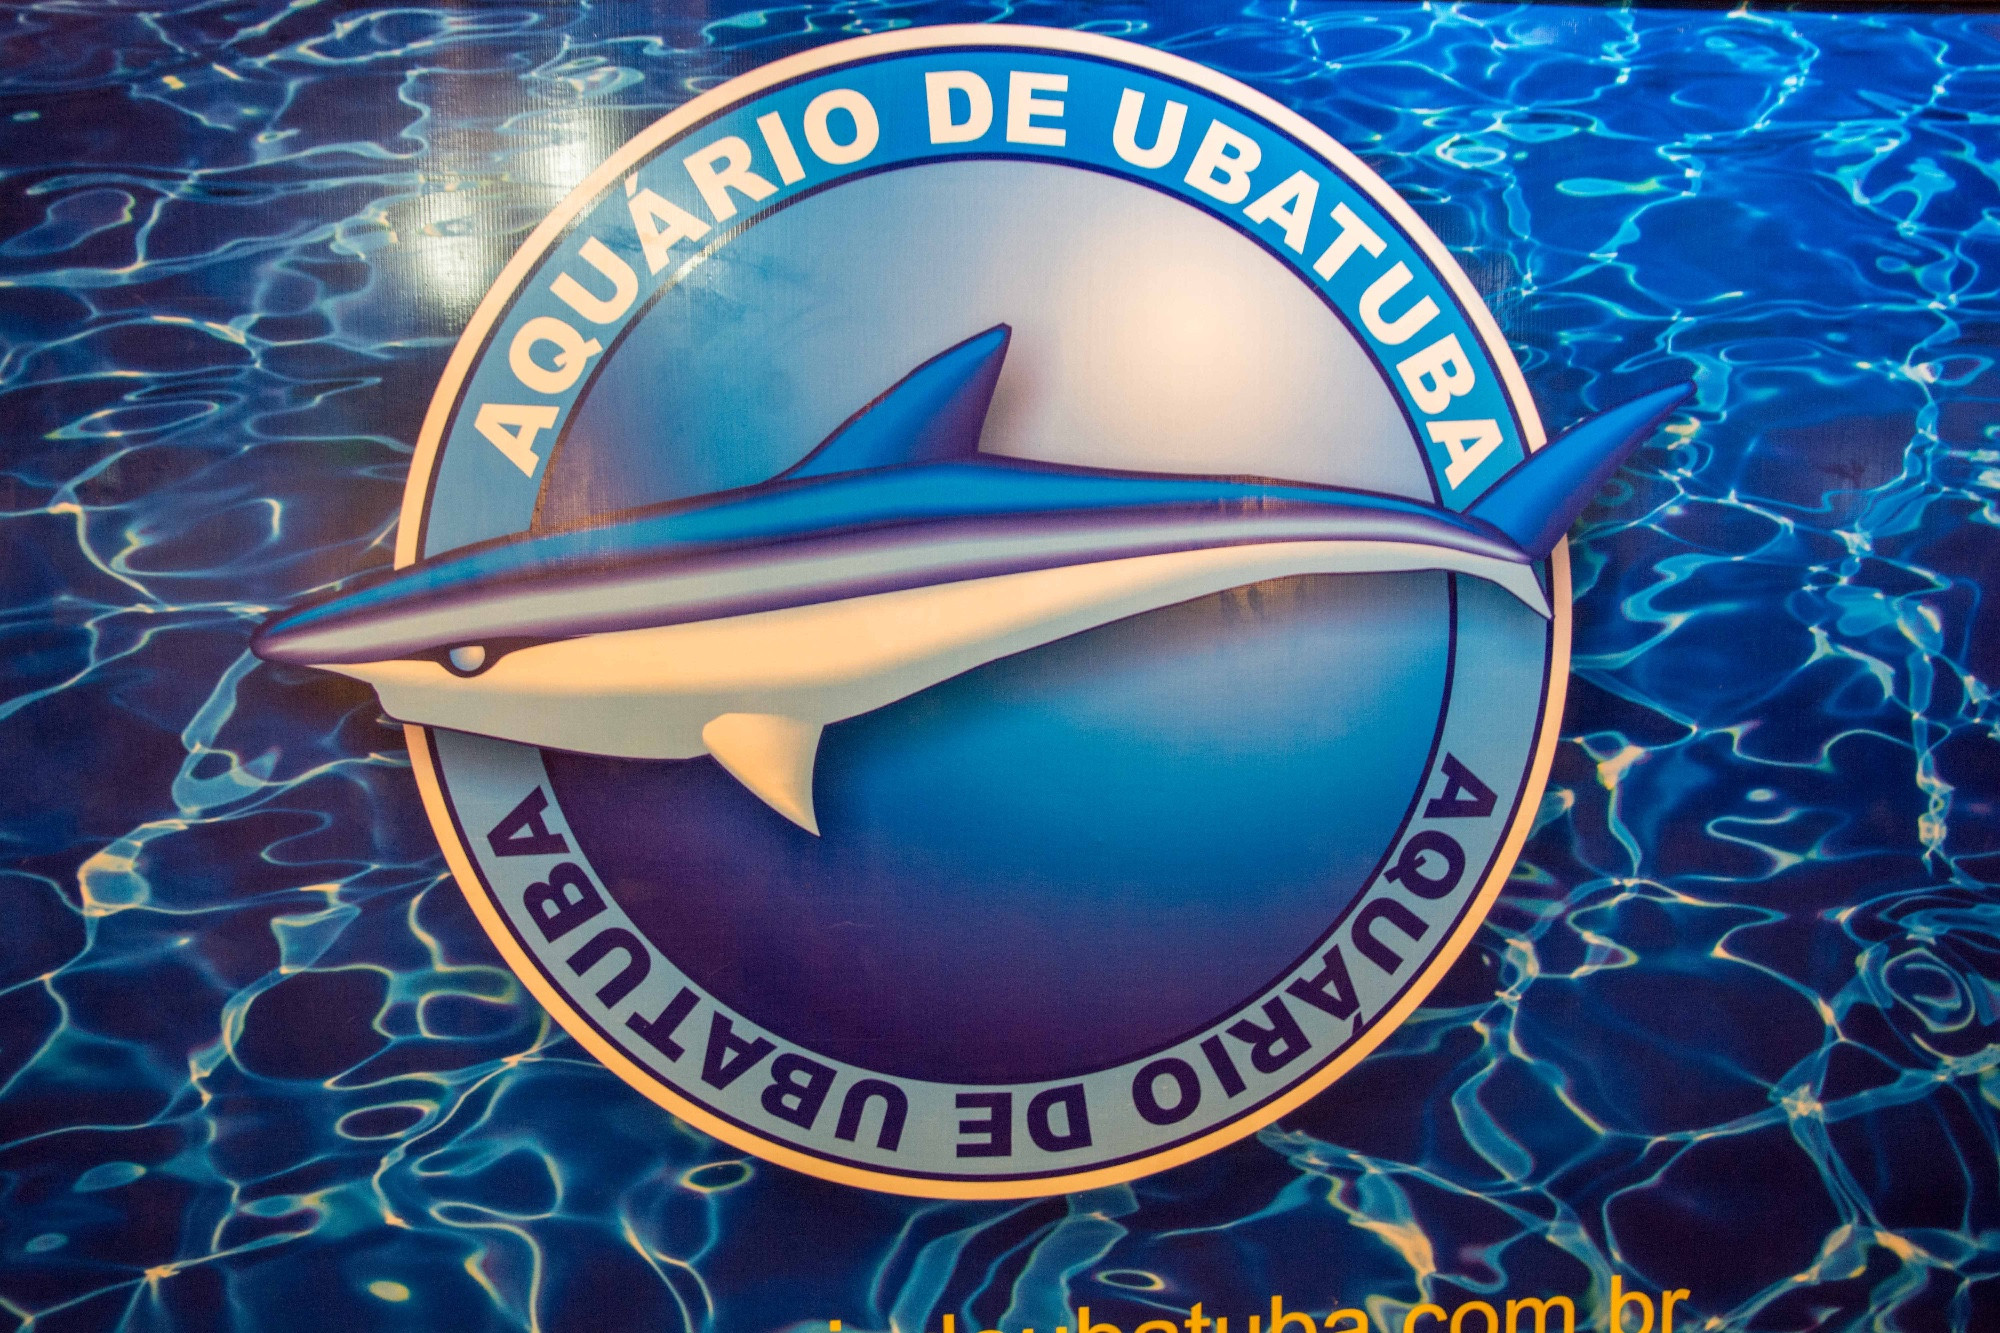 Aquarium de Ubatuba